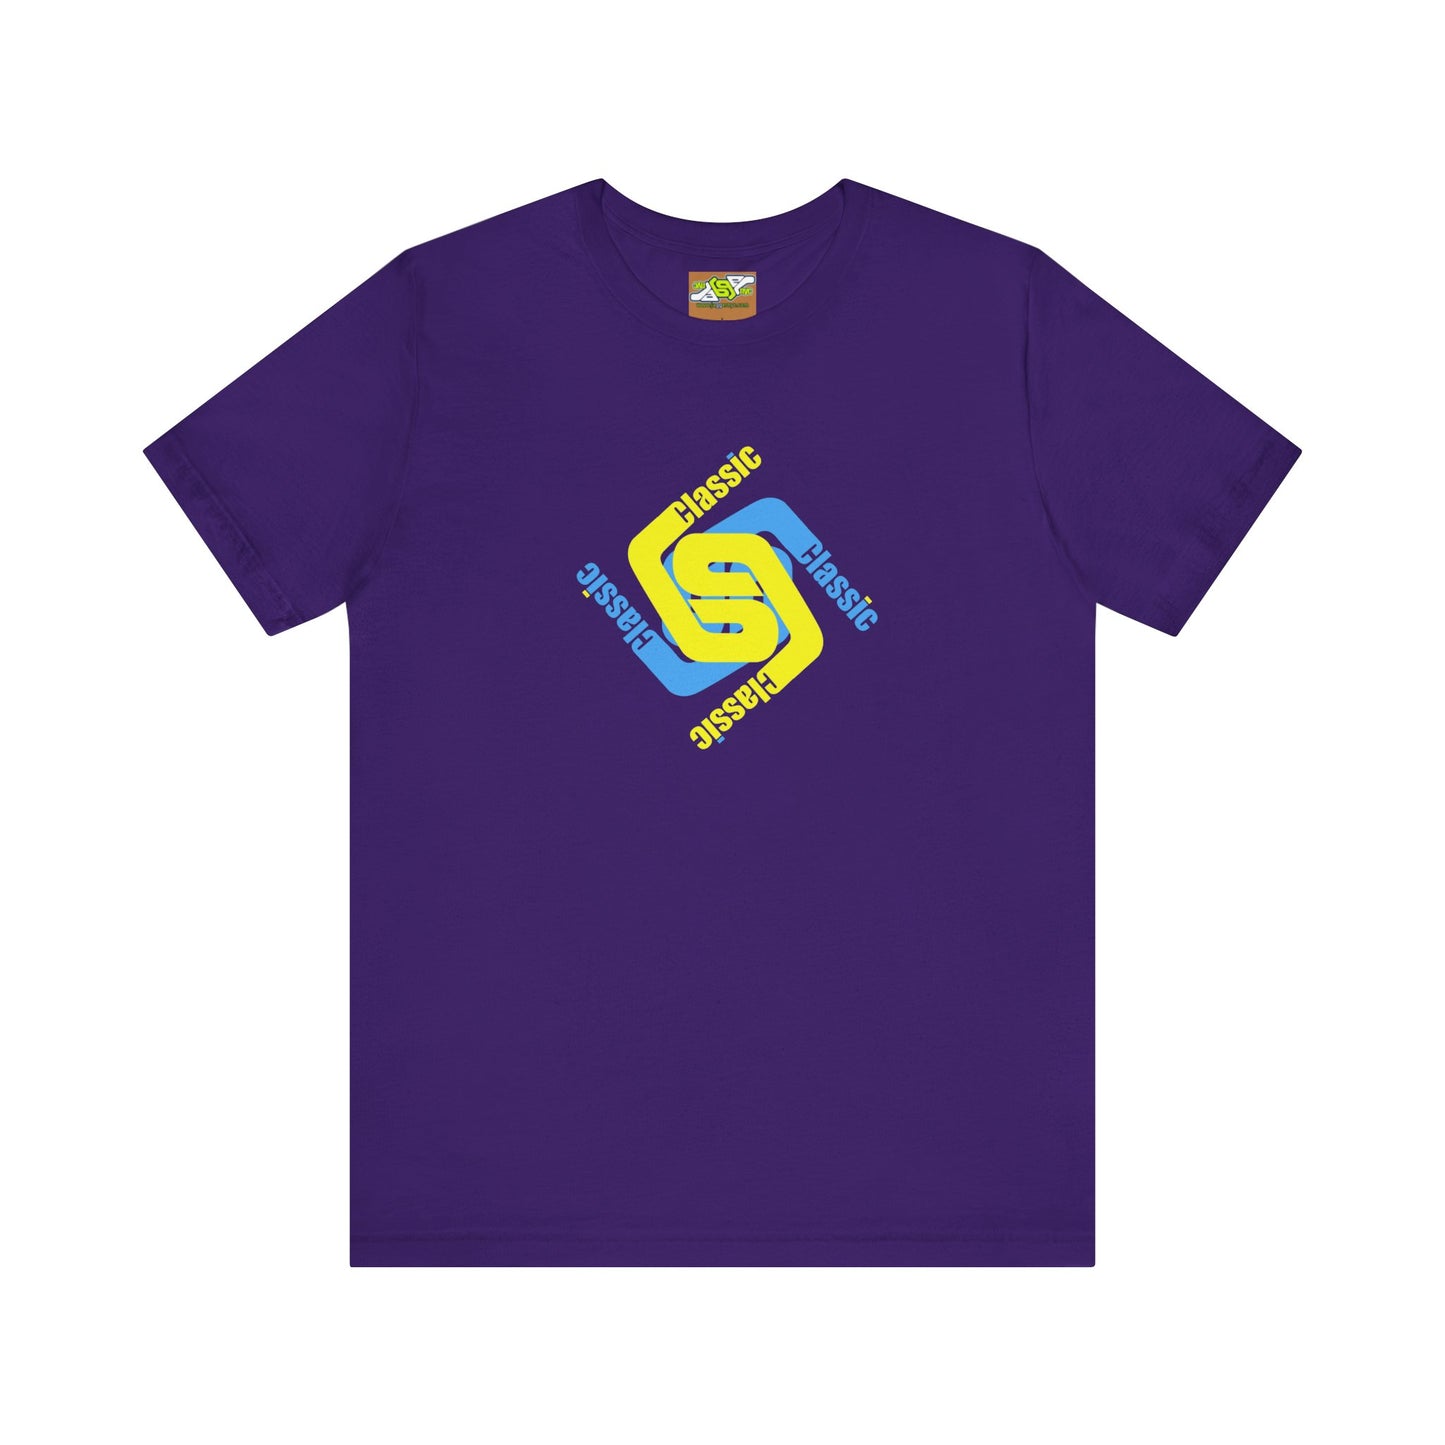 "Classic GG Logo Plus - v3" T-shirt